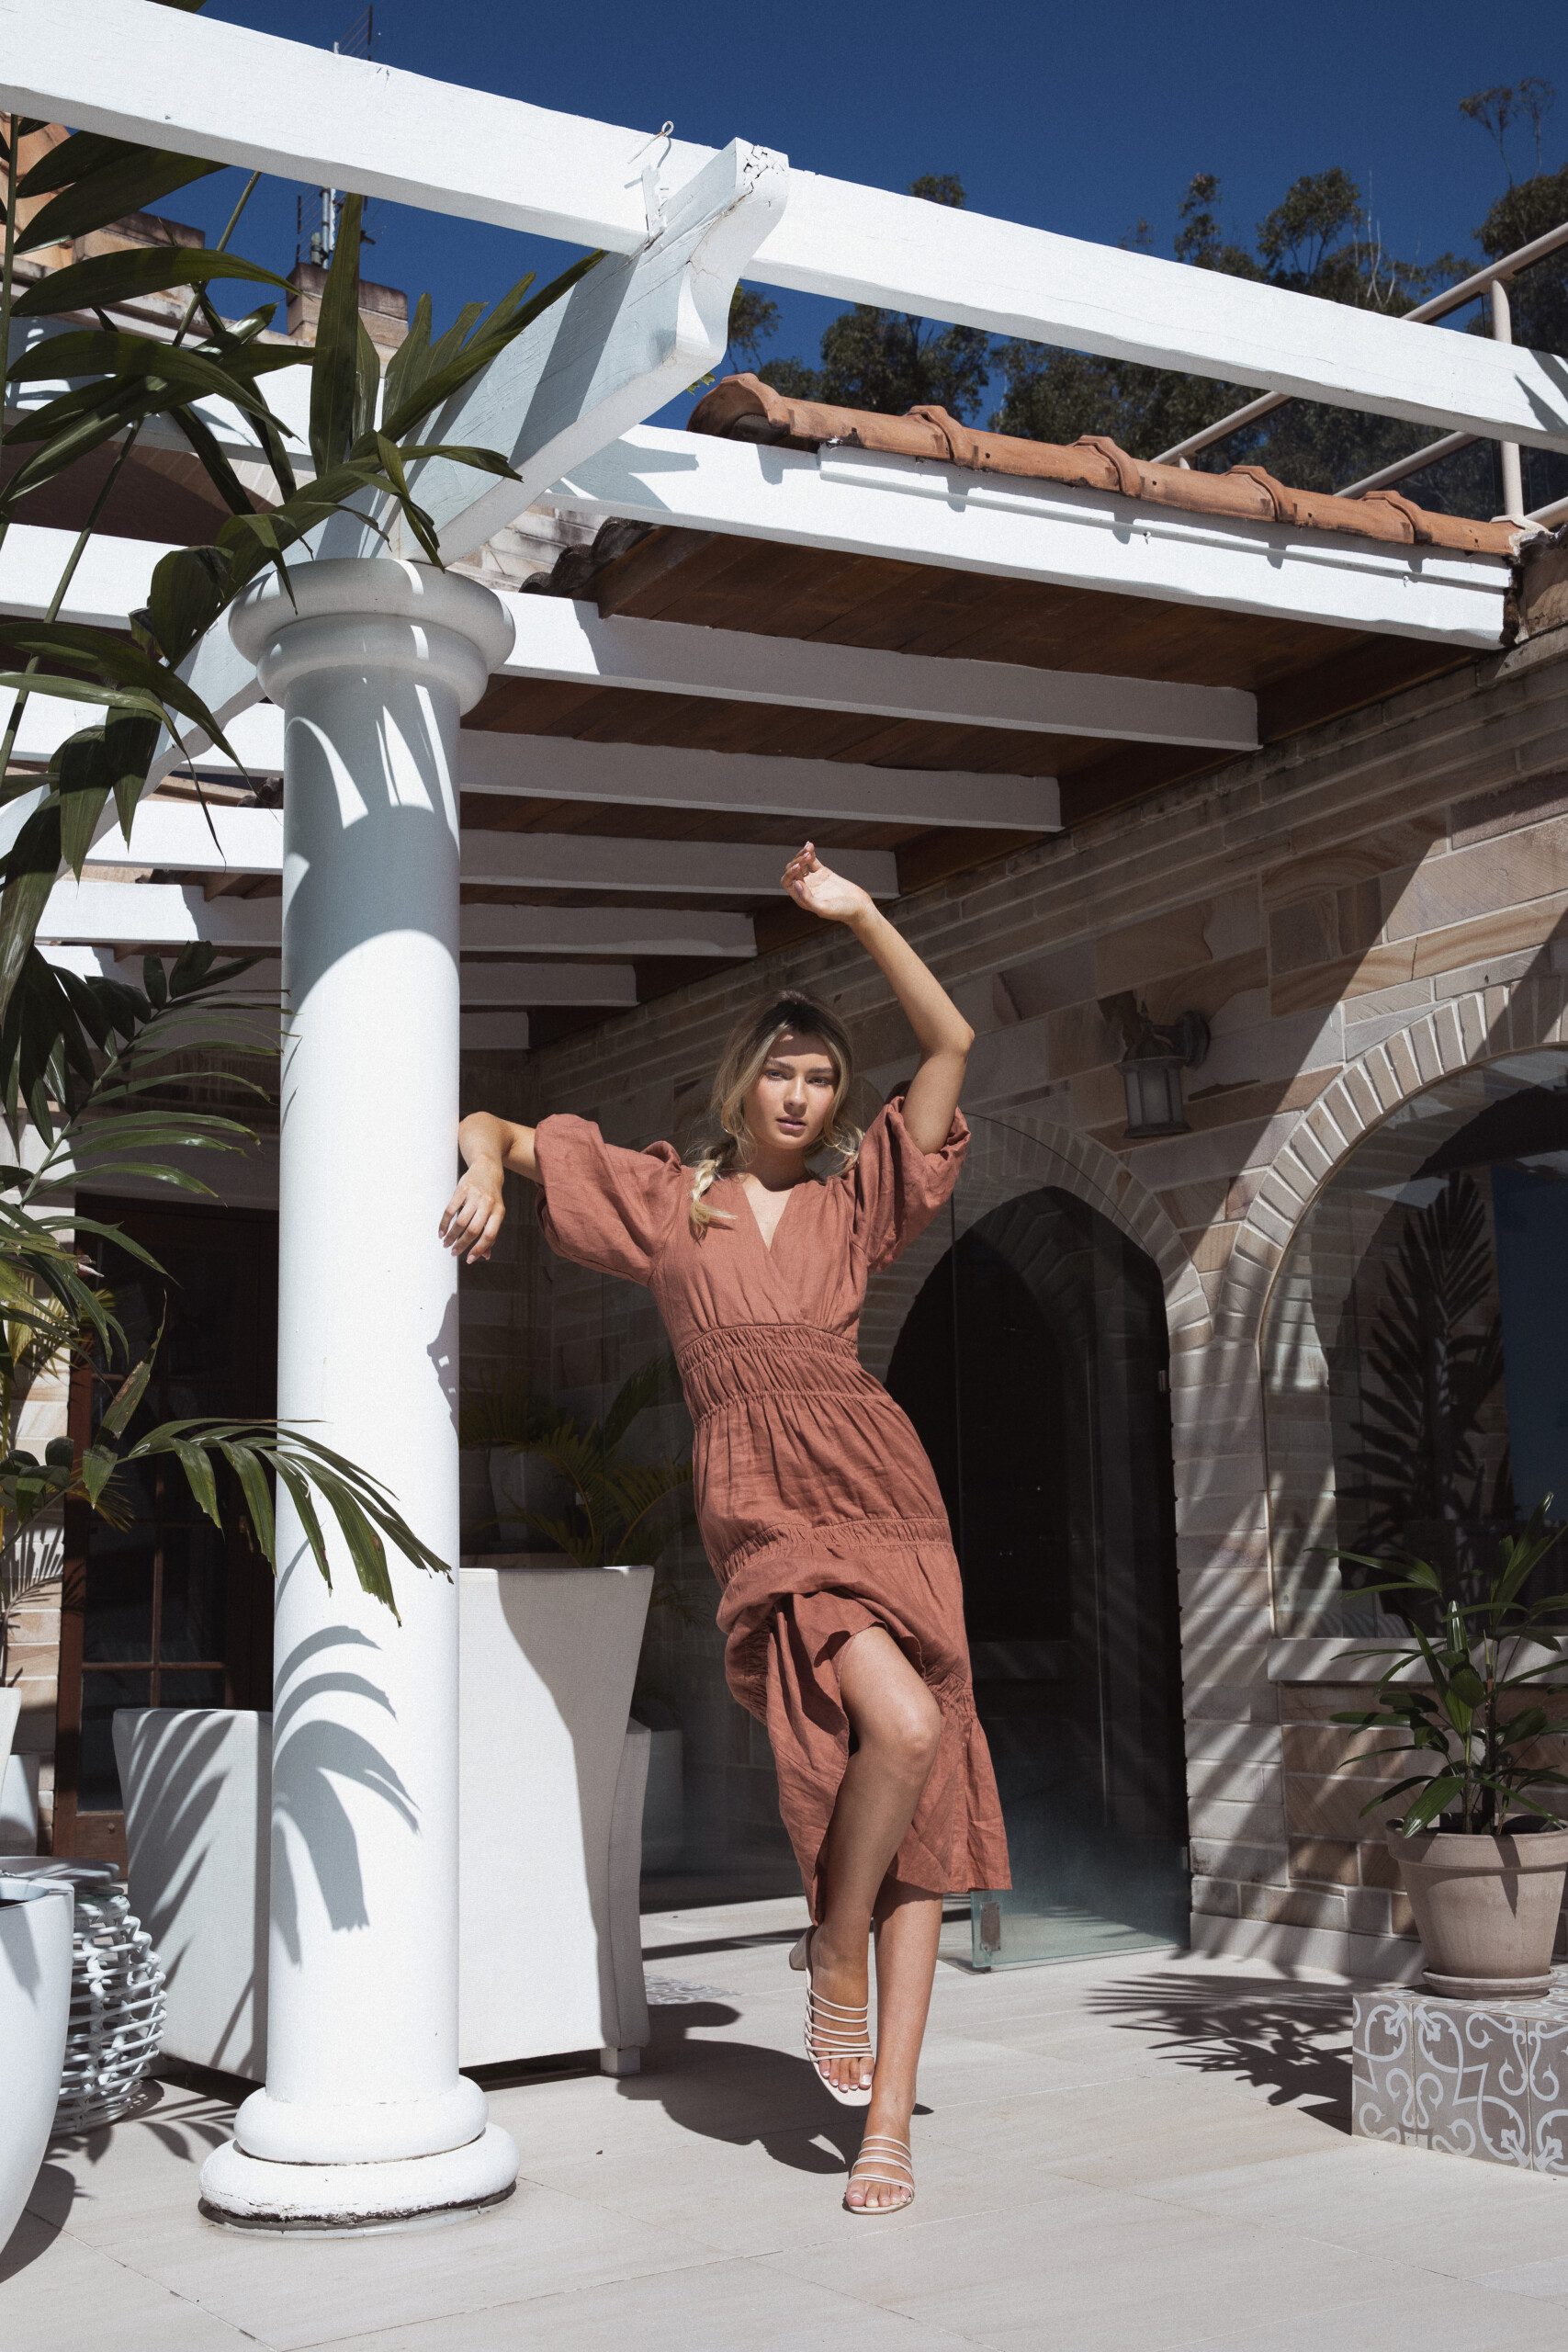 DeLa Tourelle House – European Elegance, Resort Style